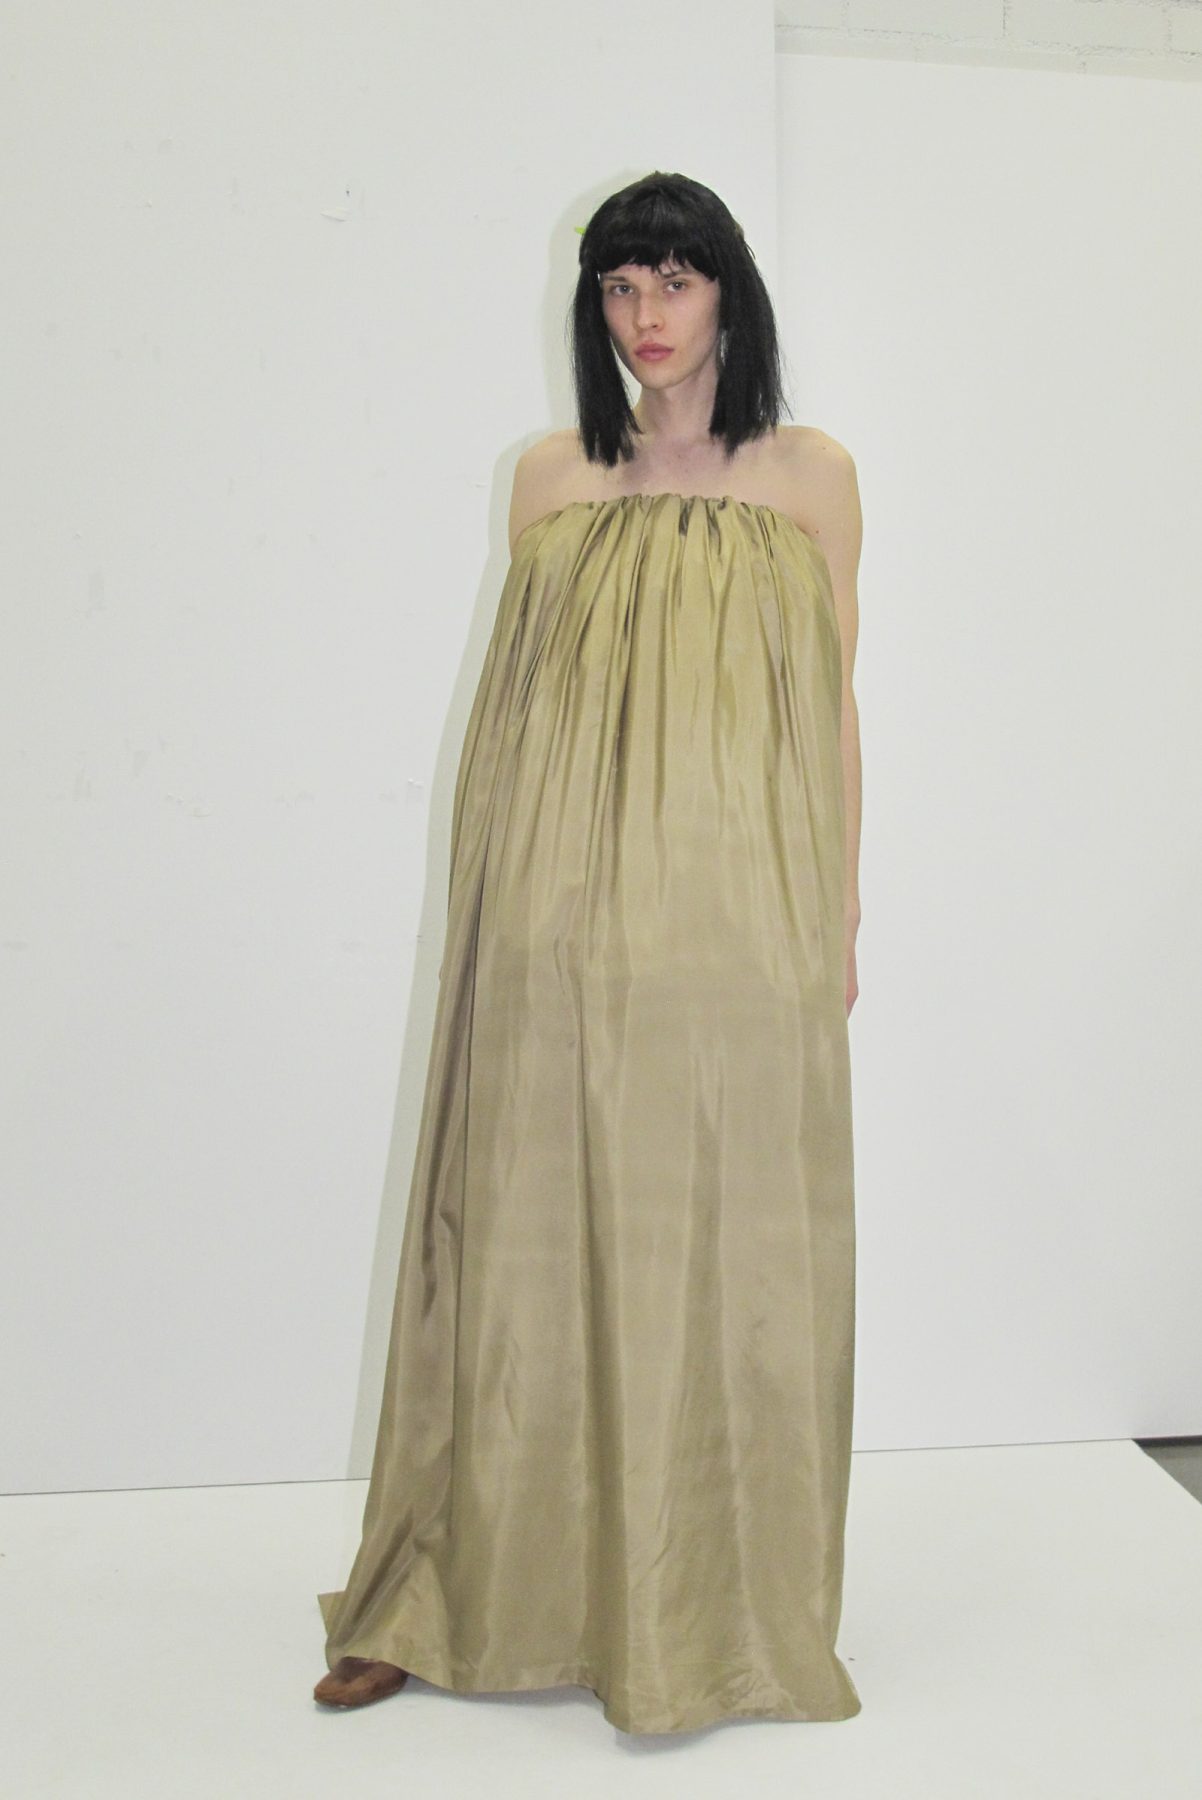 Photo of model wearing light brown long voluminous dress